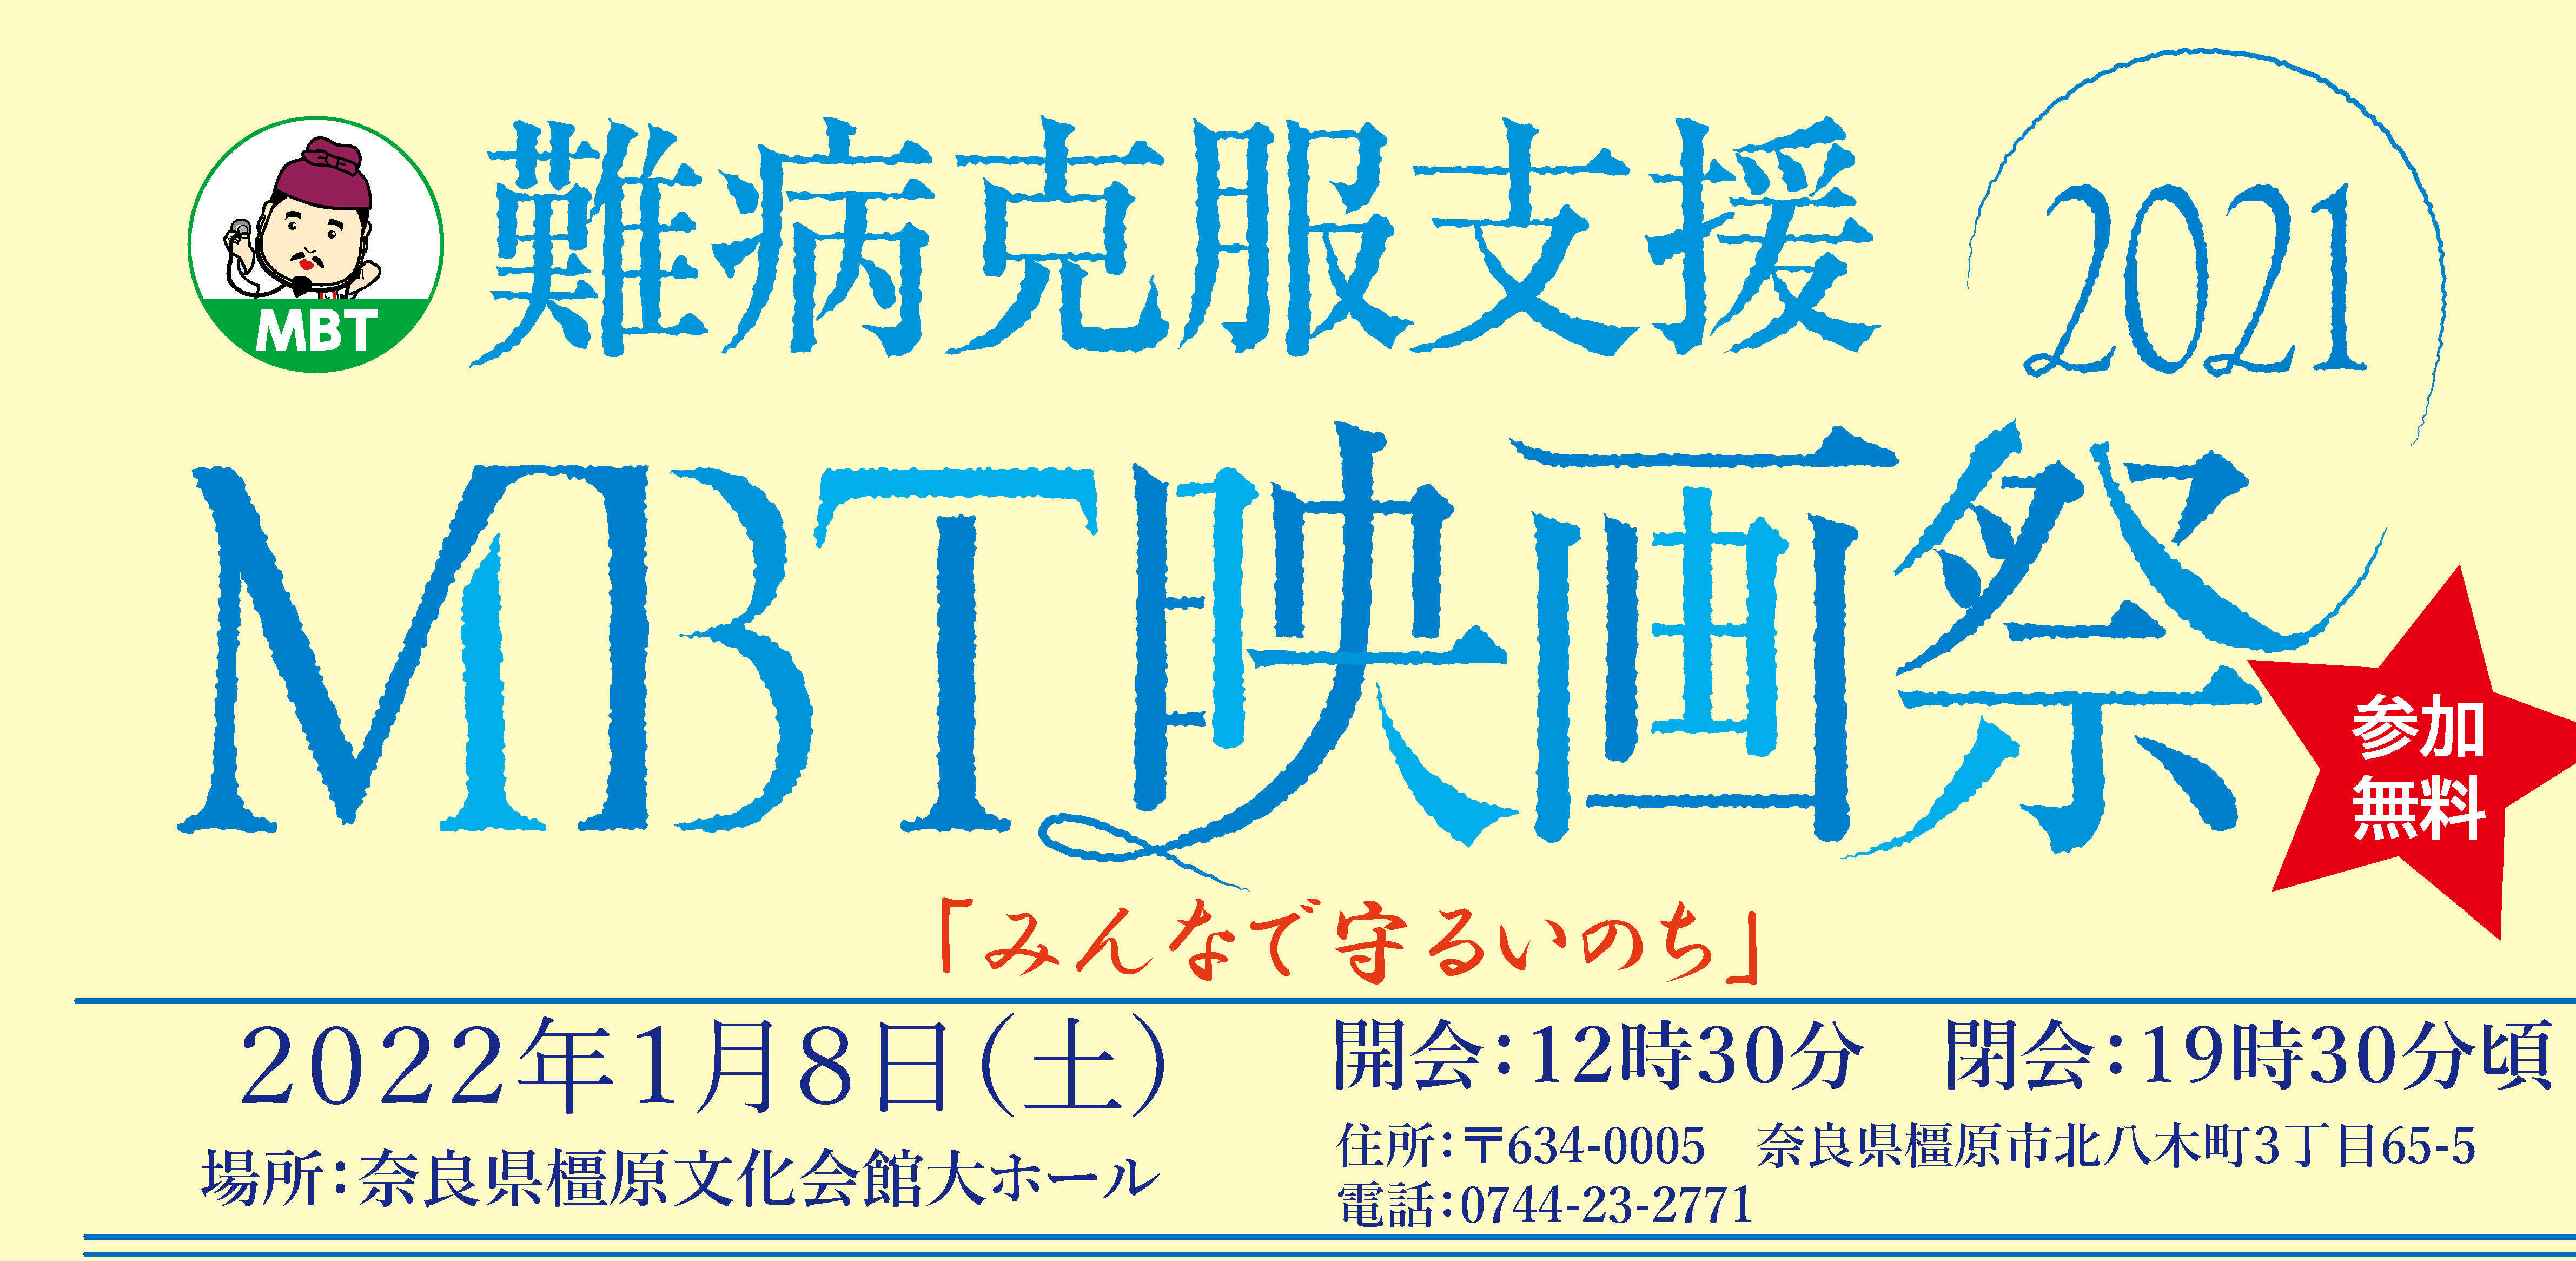 「難病克服支援MBT映画祭2021」が1月8日(土)
奈良県橿原文化会館大ホールで開催！